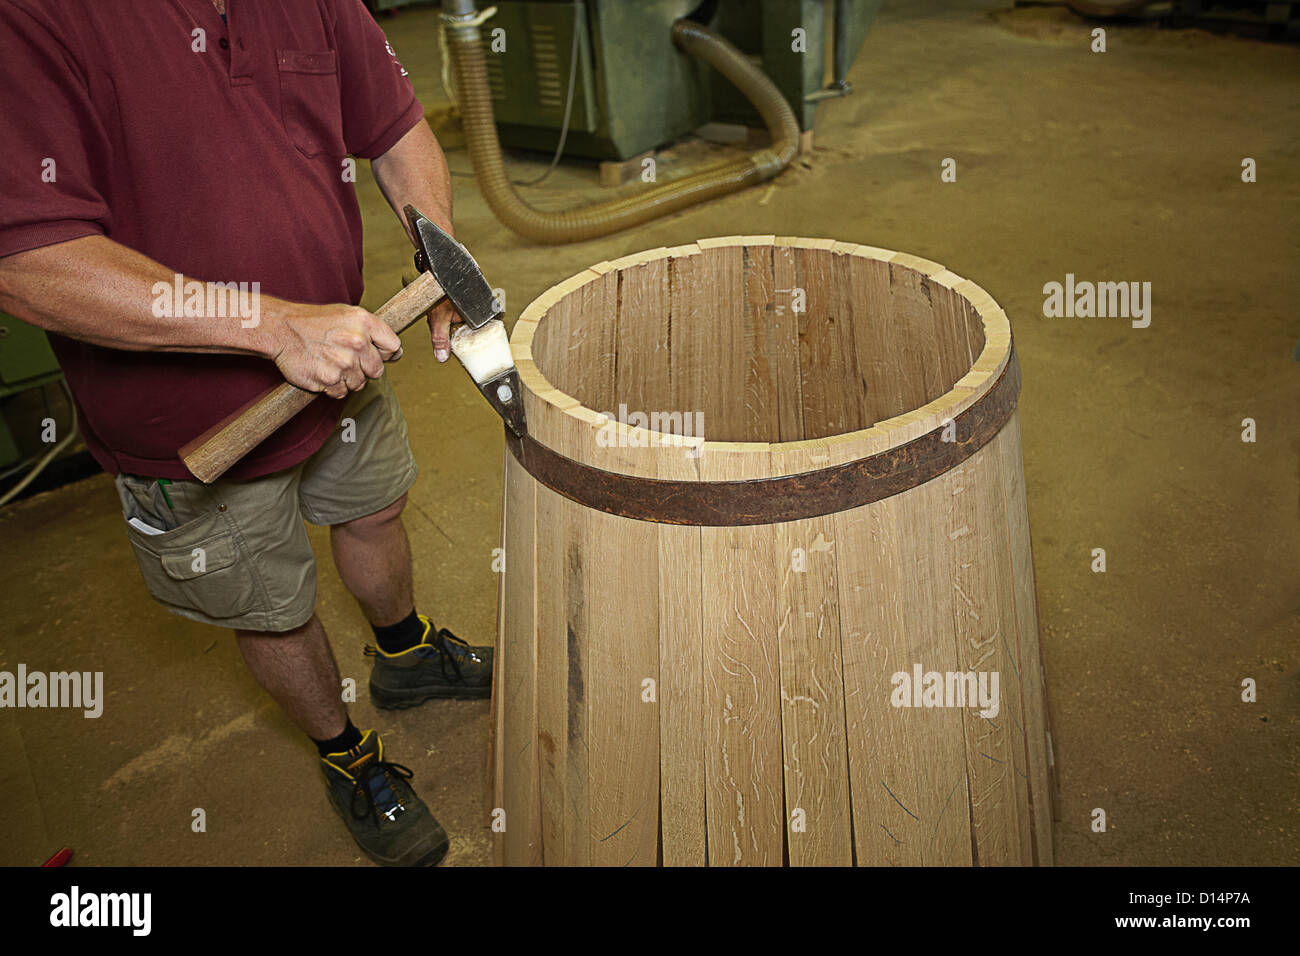 Worker hammering barrel in shop Stock Photo